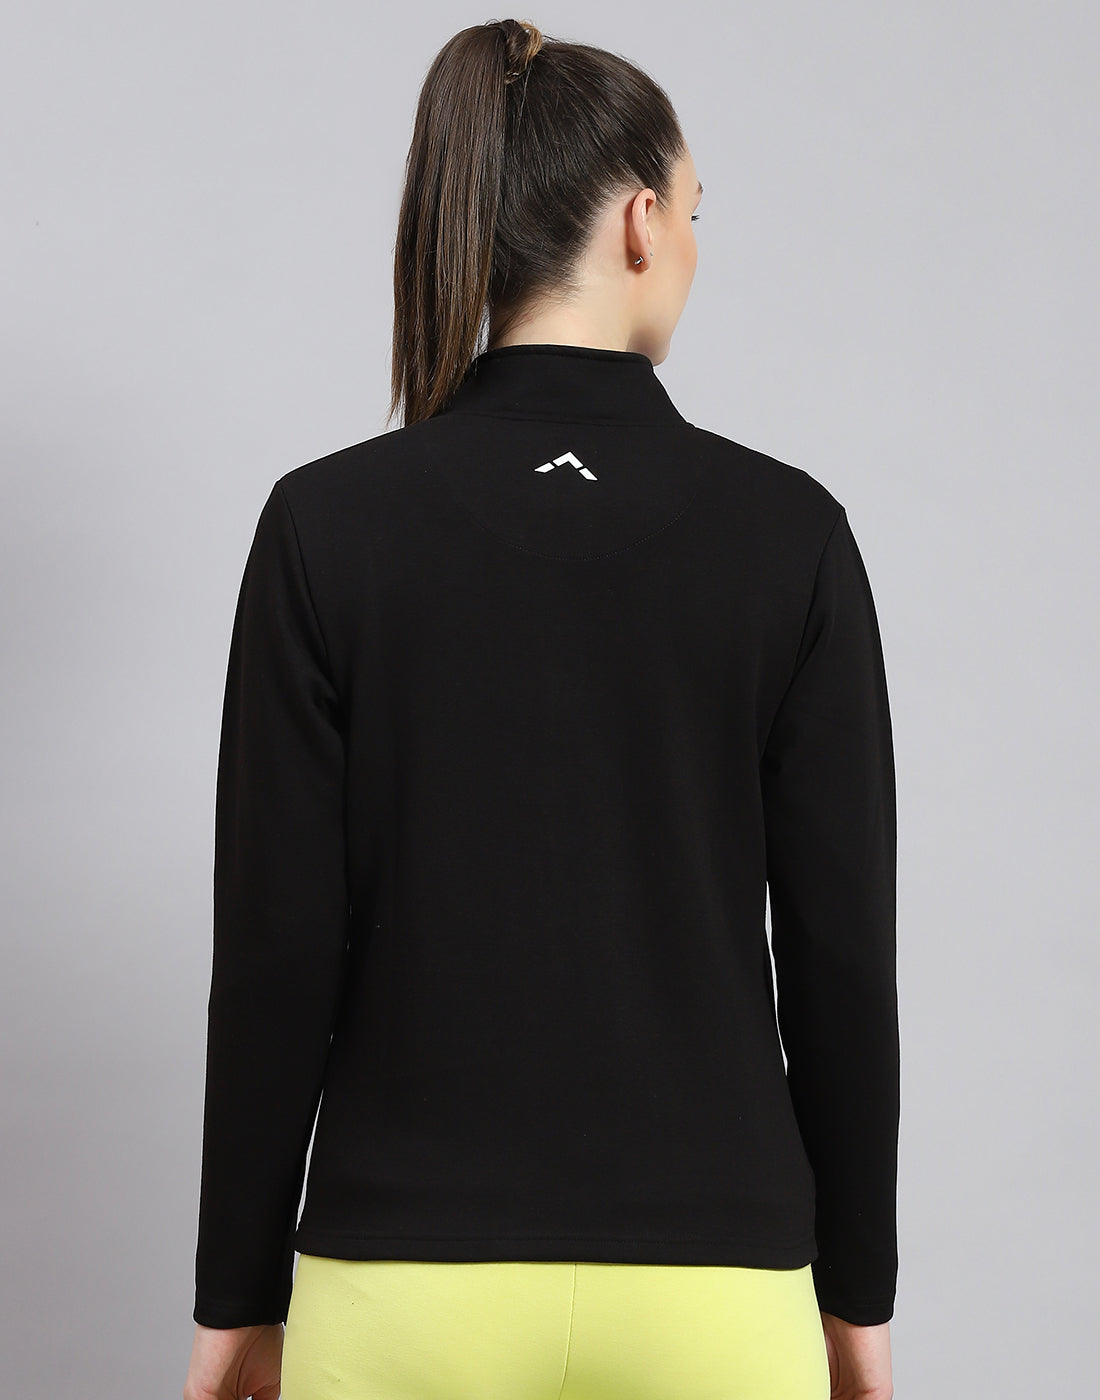 Women Black Solid Stand Collar Full Sleeve Sweatshirt